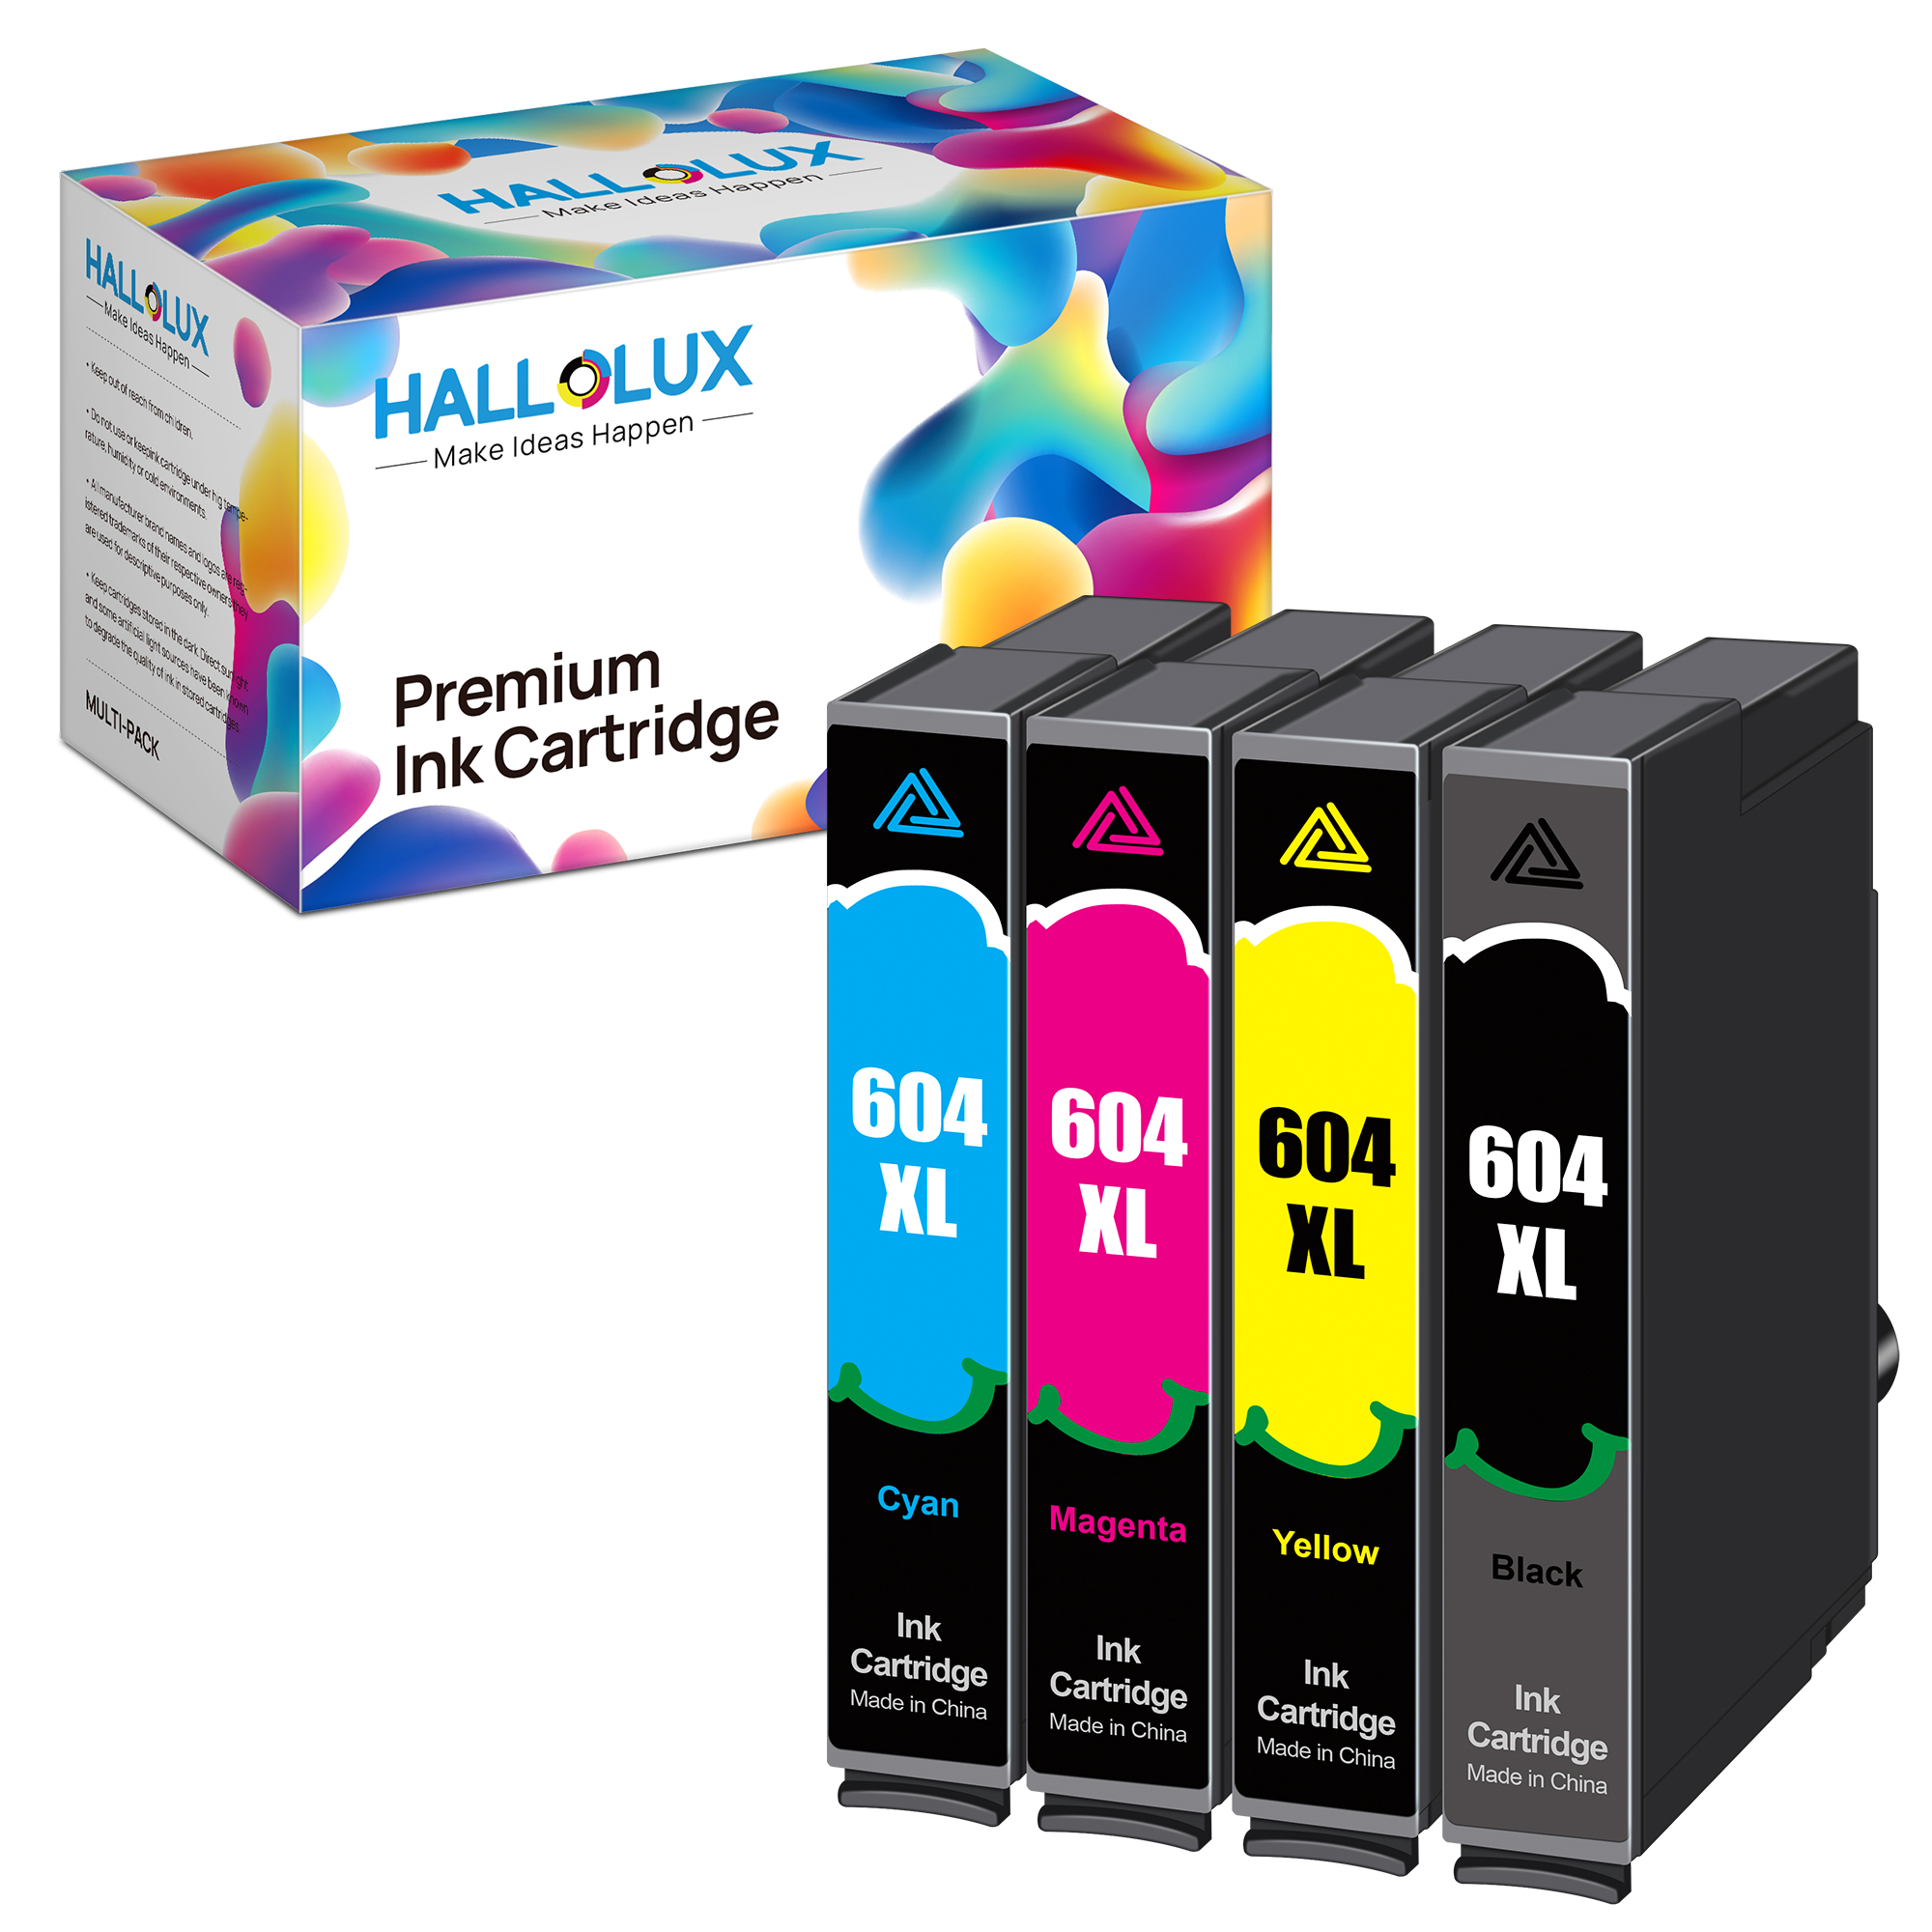 KEENKLE Compatible 903XL Ink Cartridges (1 Black,1 Cyan,1 Magenta,1 Ye